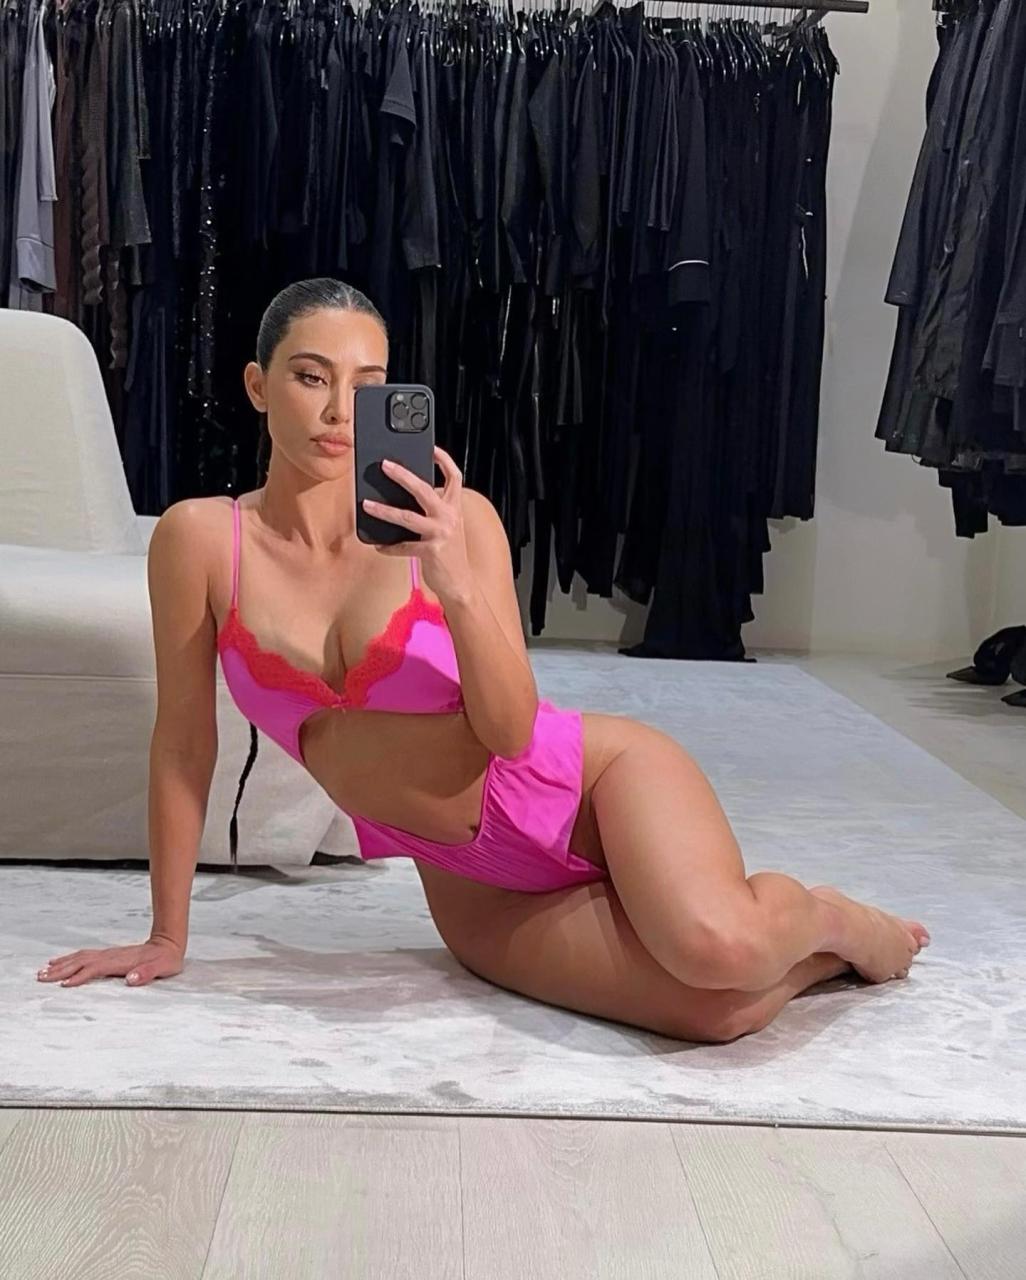 Kim Kardashian modeled pink Skims lingerie in a new post on Instagram